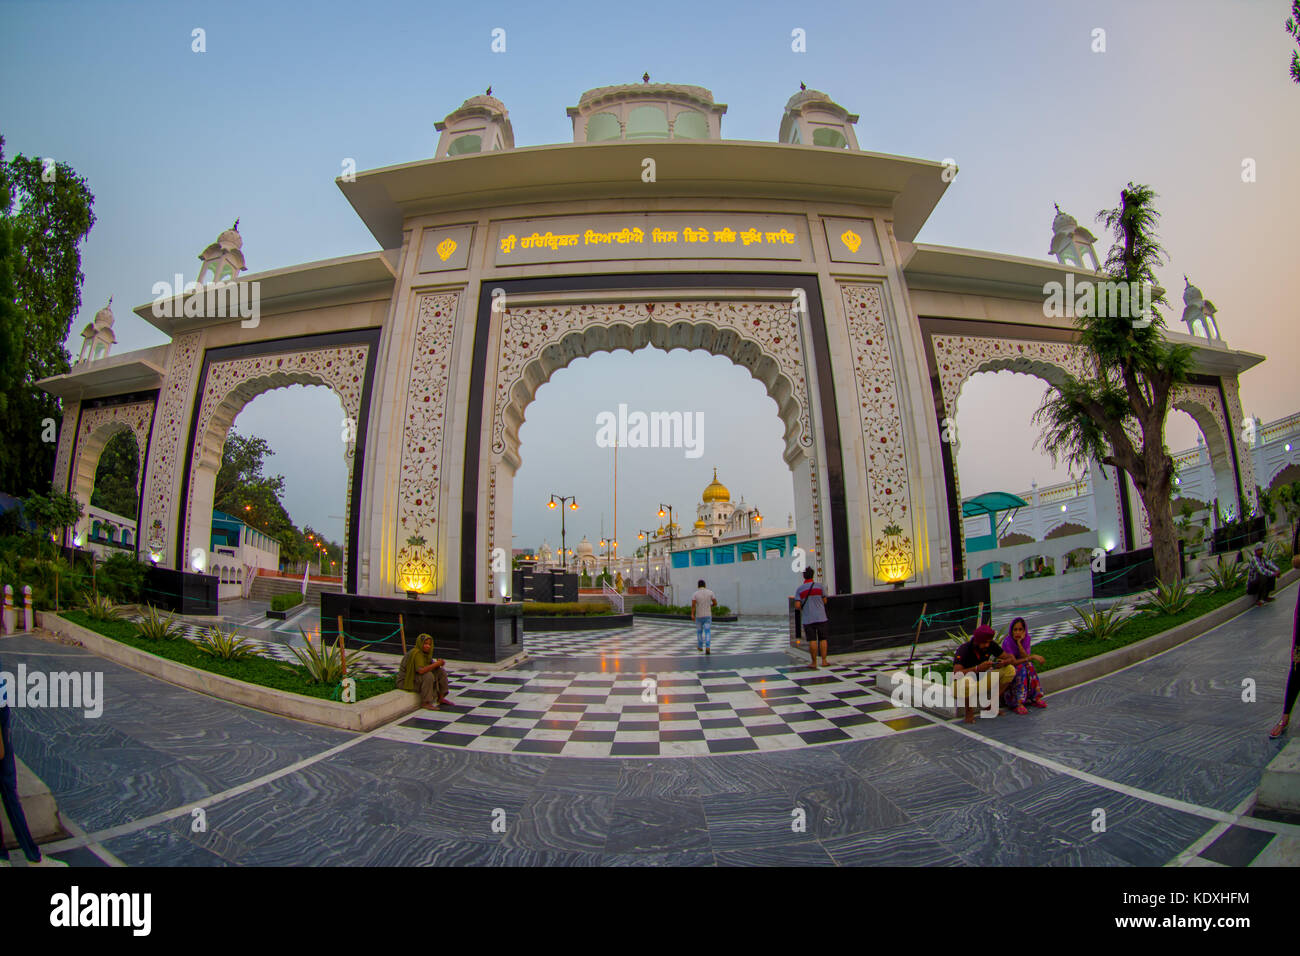 DELHI, INDIA - SEPTEMBER 19, 2017: Big white gate to the enter of Gurudwara Bangla Sahib Sikh Temple, located in New Delhi, India, fish eye effect Stock Photo